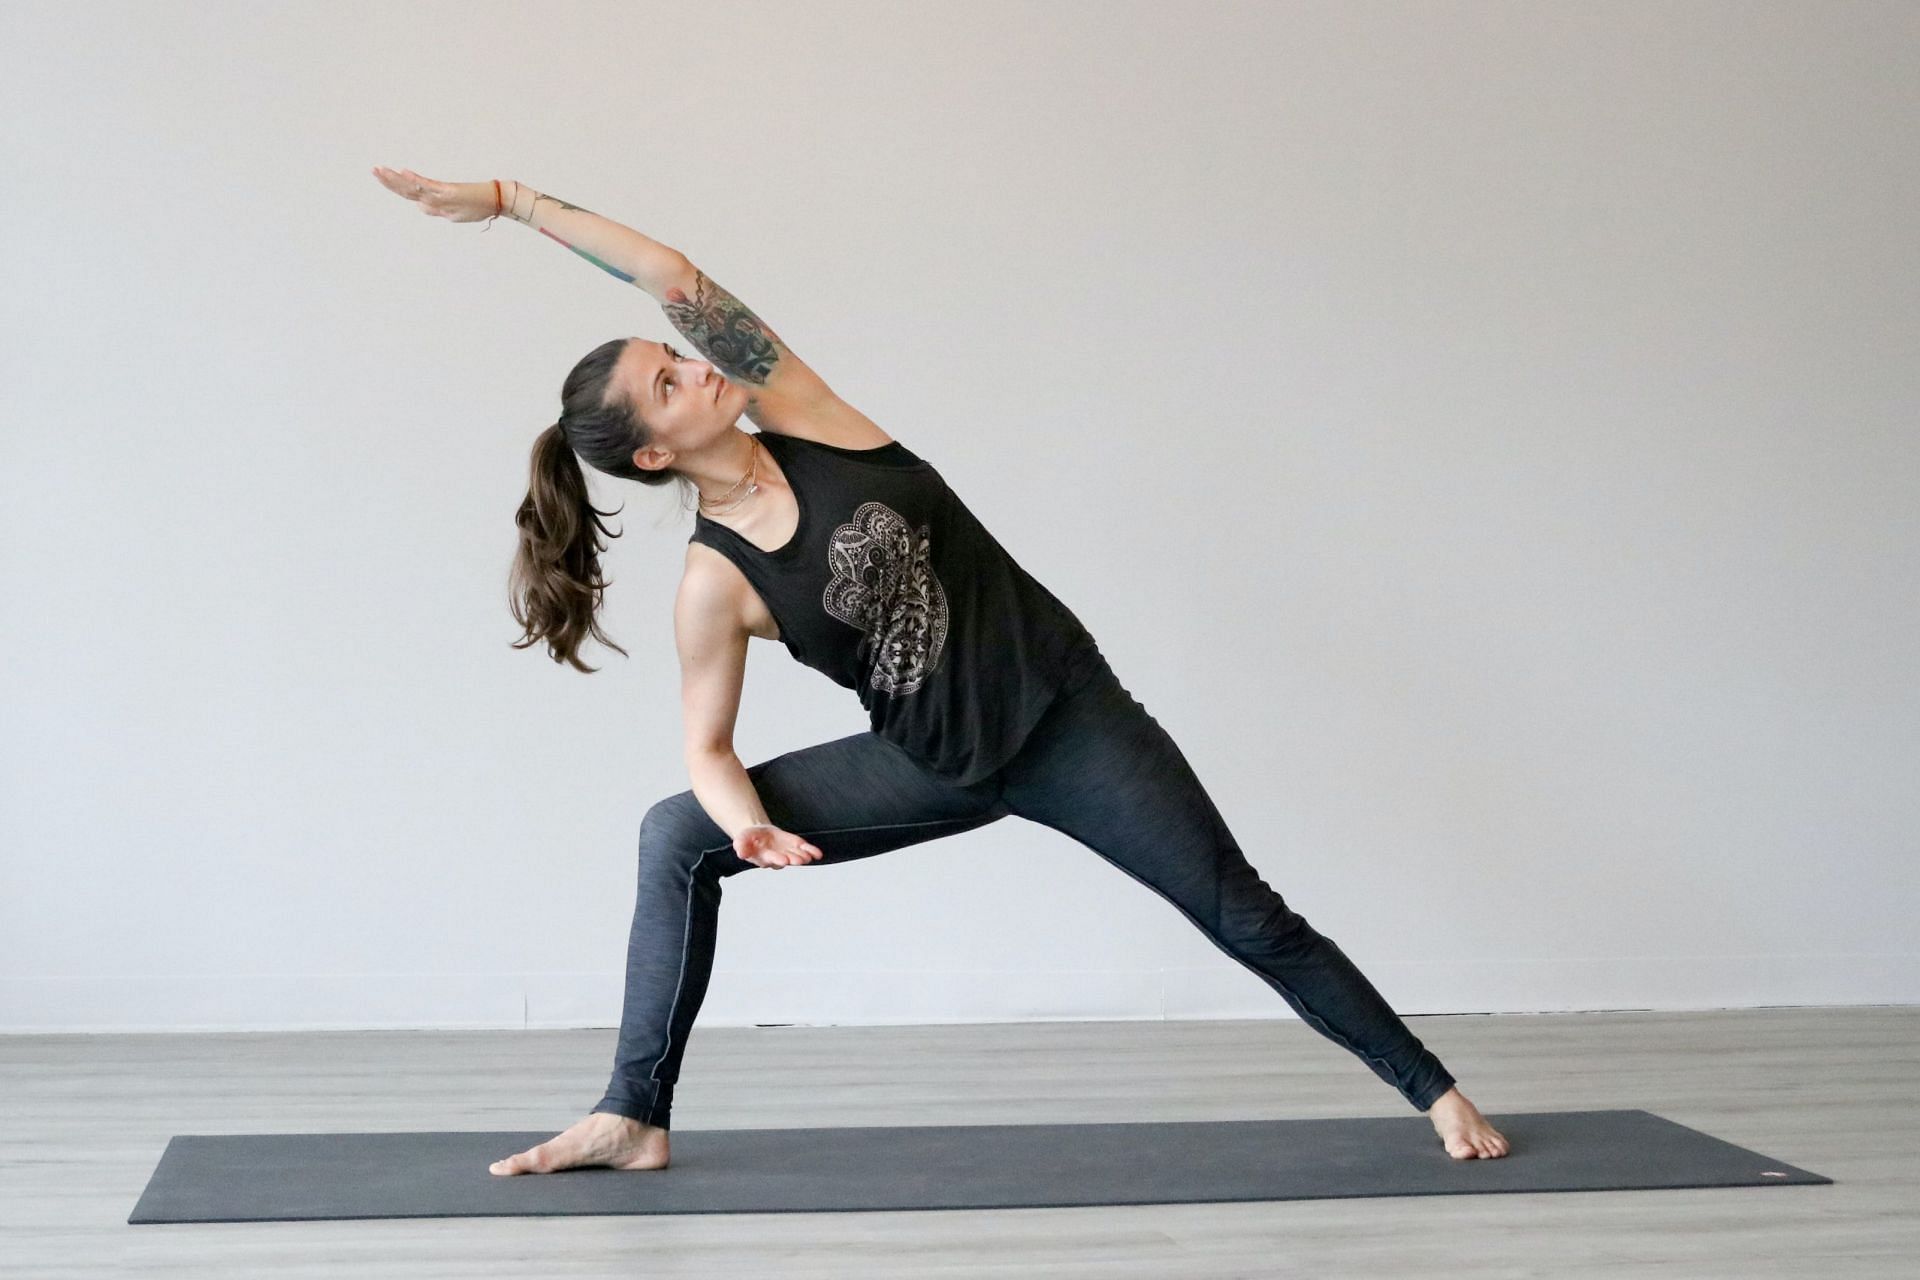 Yoga exercises are quite effective for cardiovascular health. (Image via Unsplash/Katie Bush)